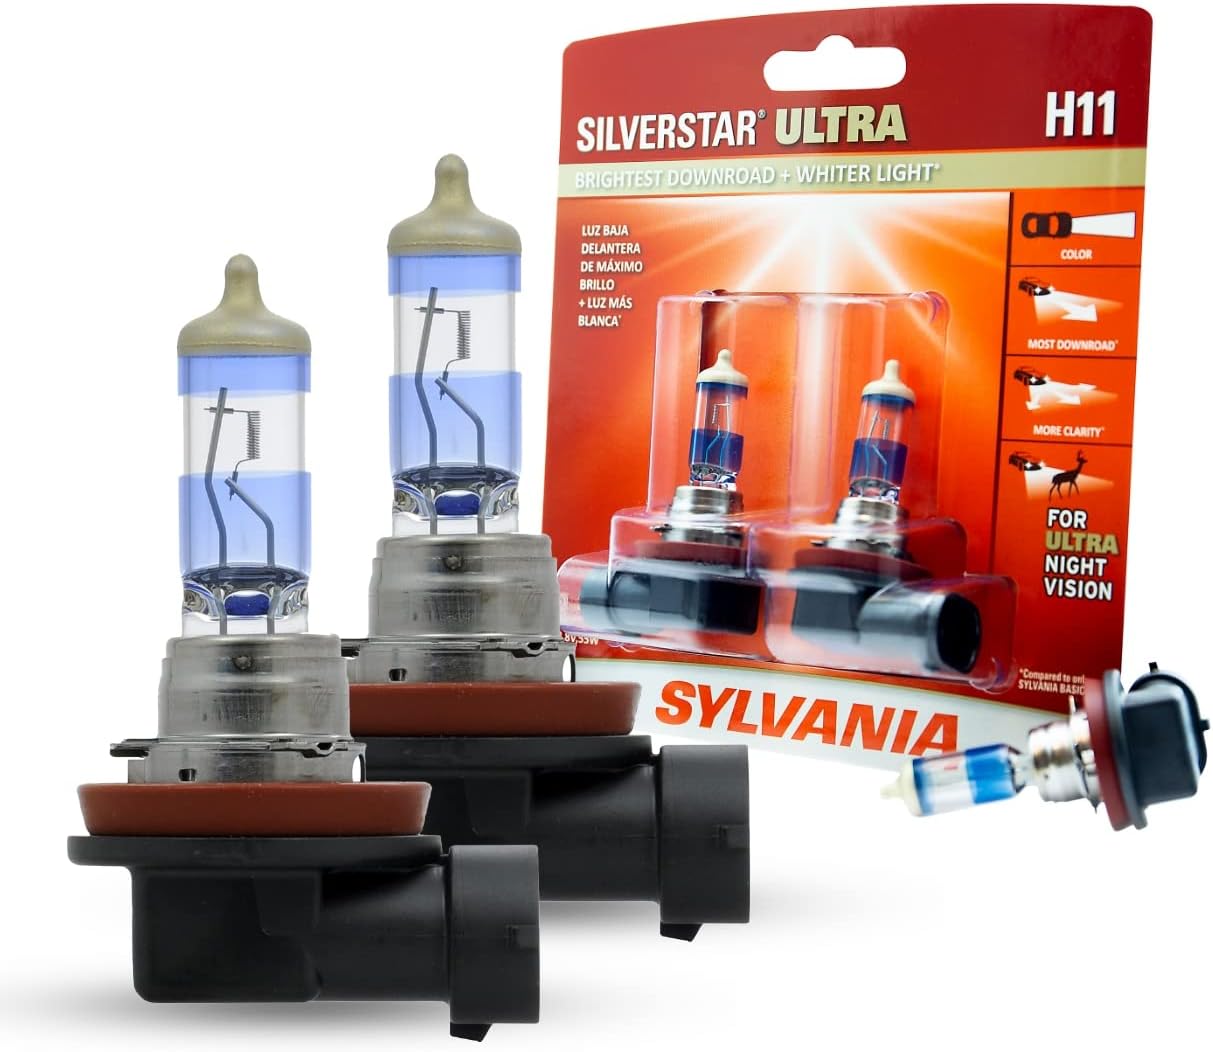 SYLVANIA H11 SilverStar Ultra High Performance Halogen Headlight Bulb, (Contains 2 Bulbs)